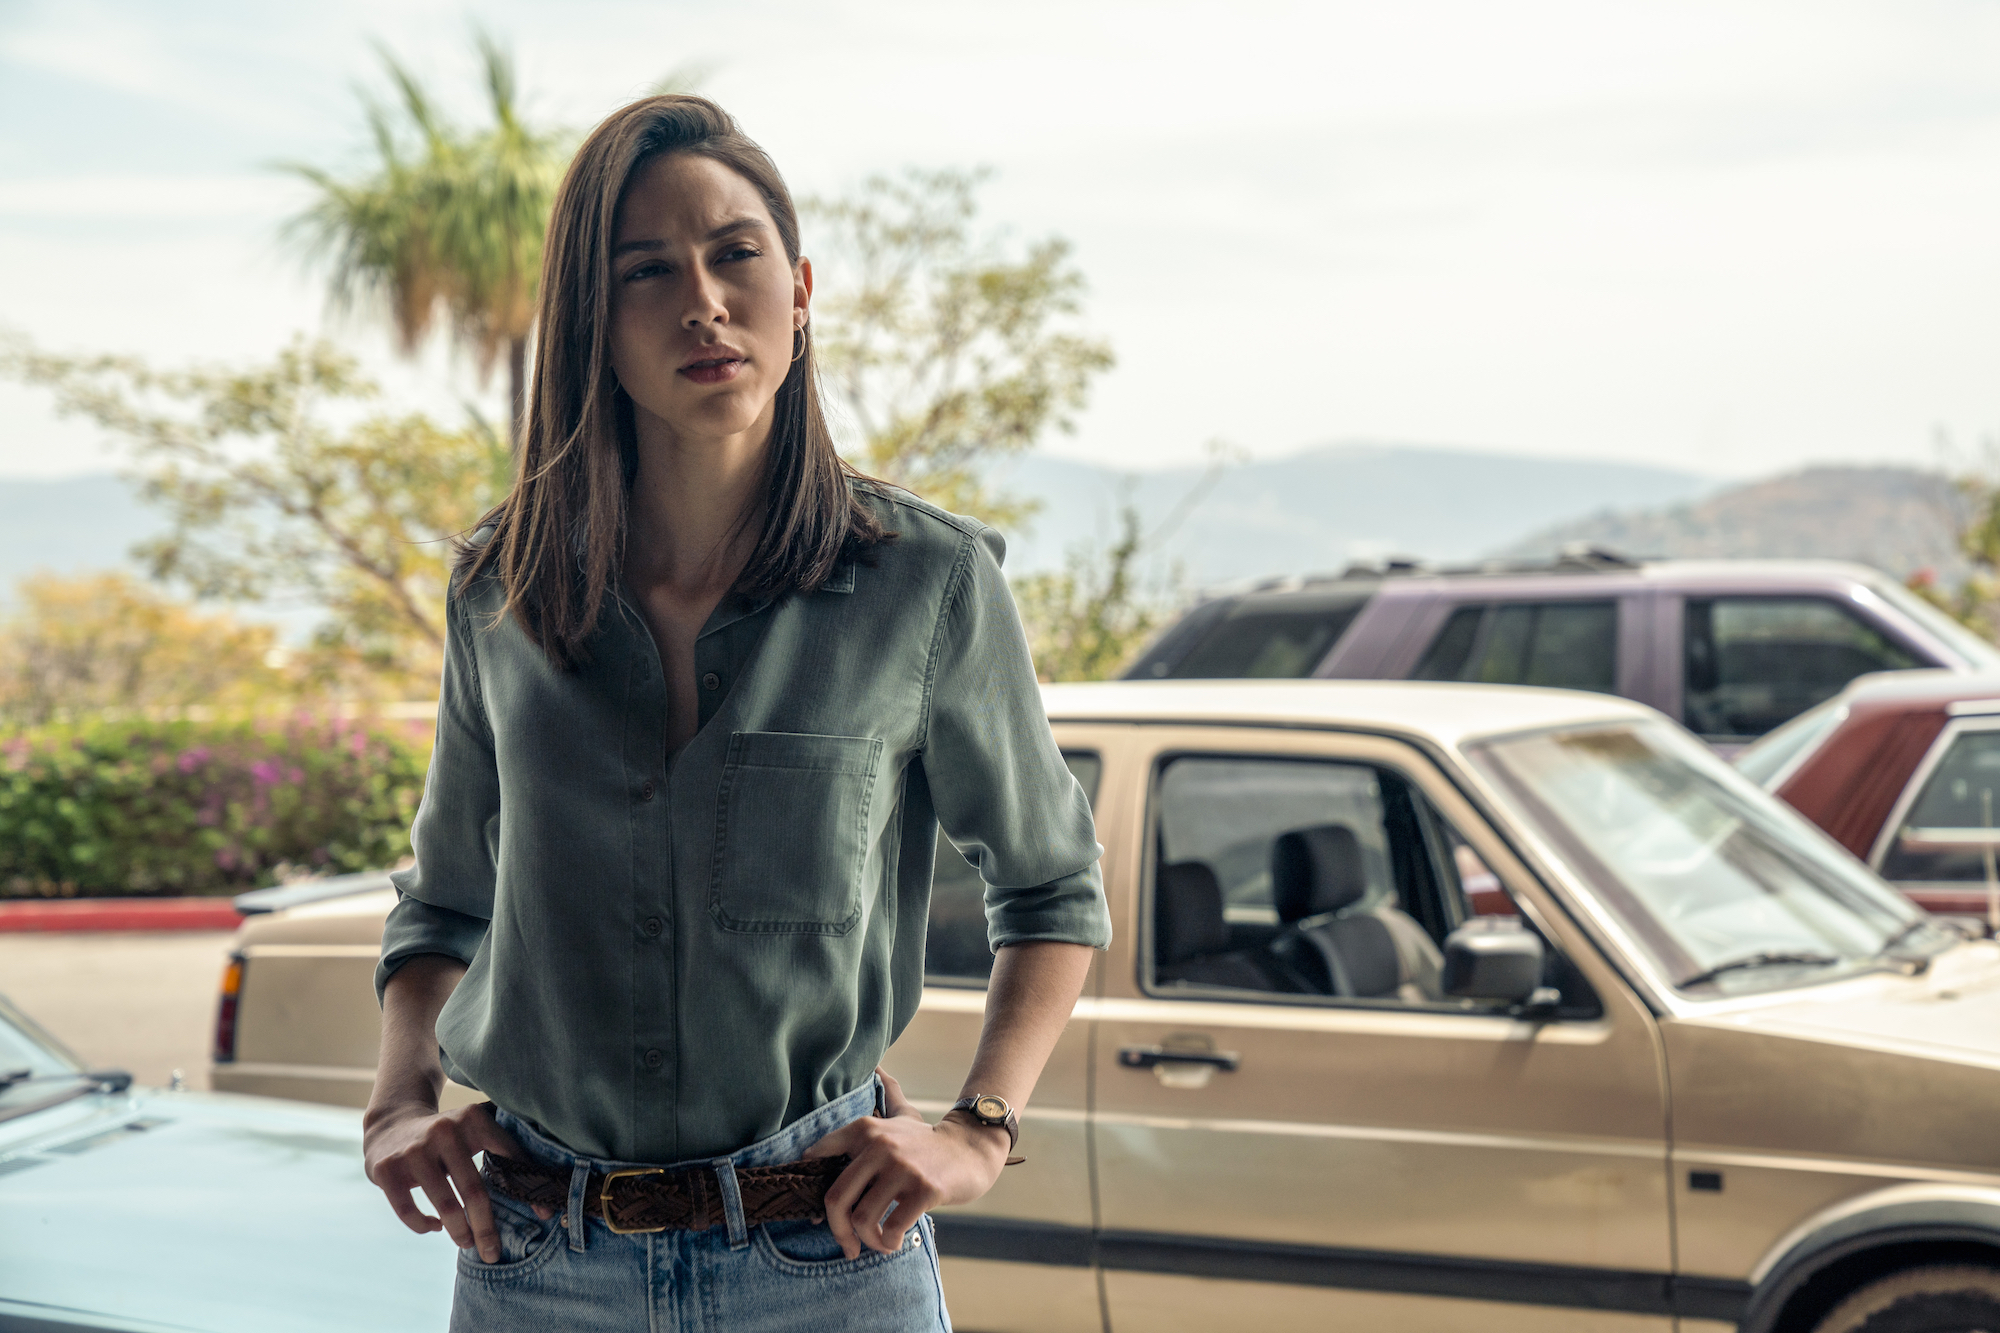 Luisa Rubino wearing a green shirt with blue jeans in 'Narcos: Mexico' Season 3.